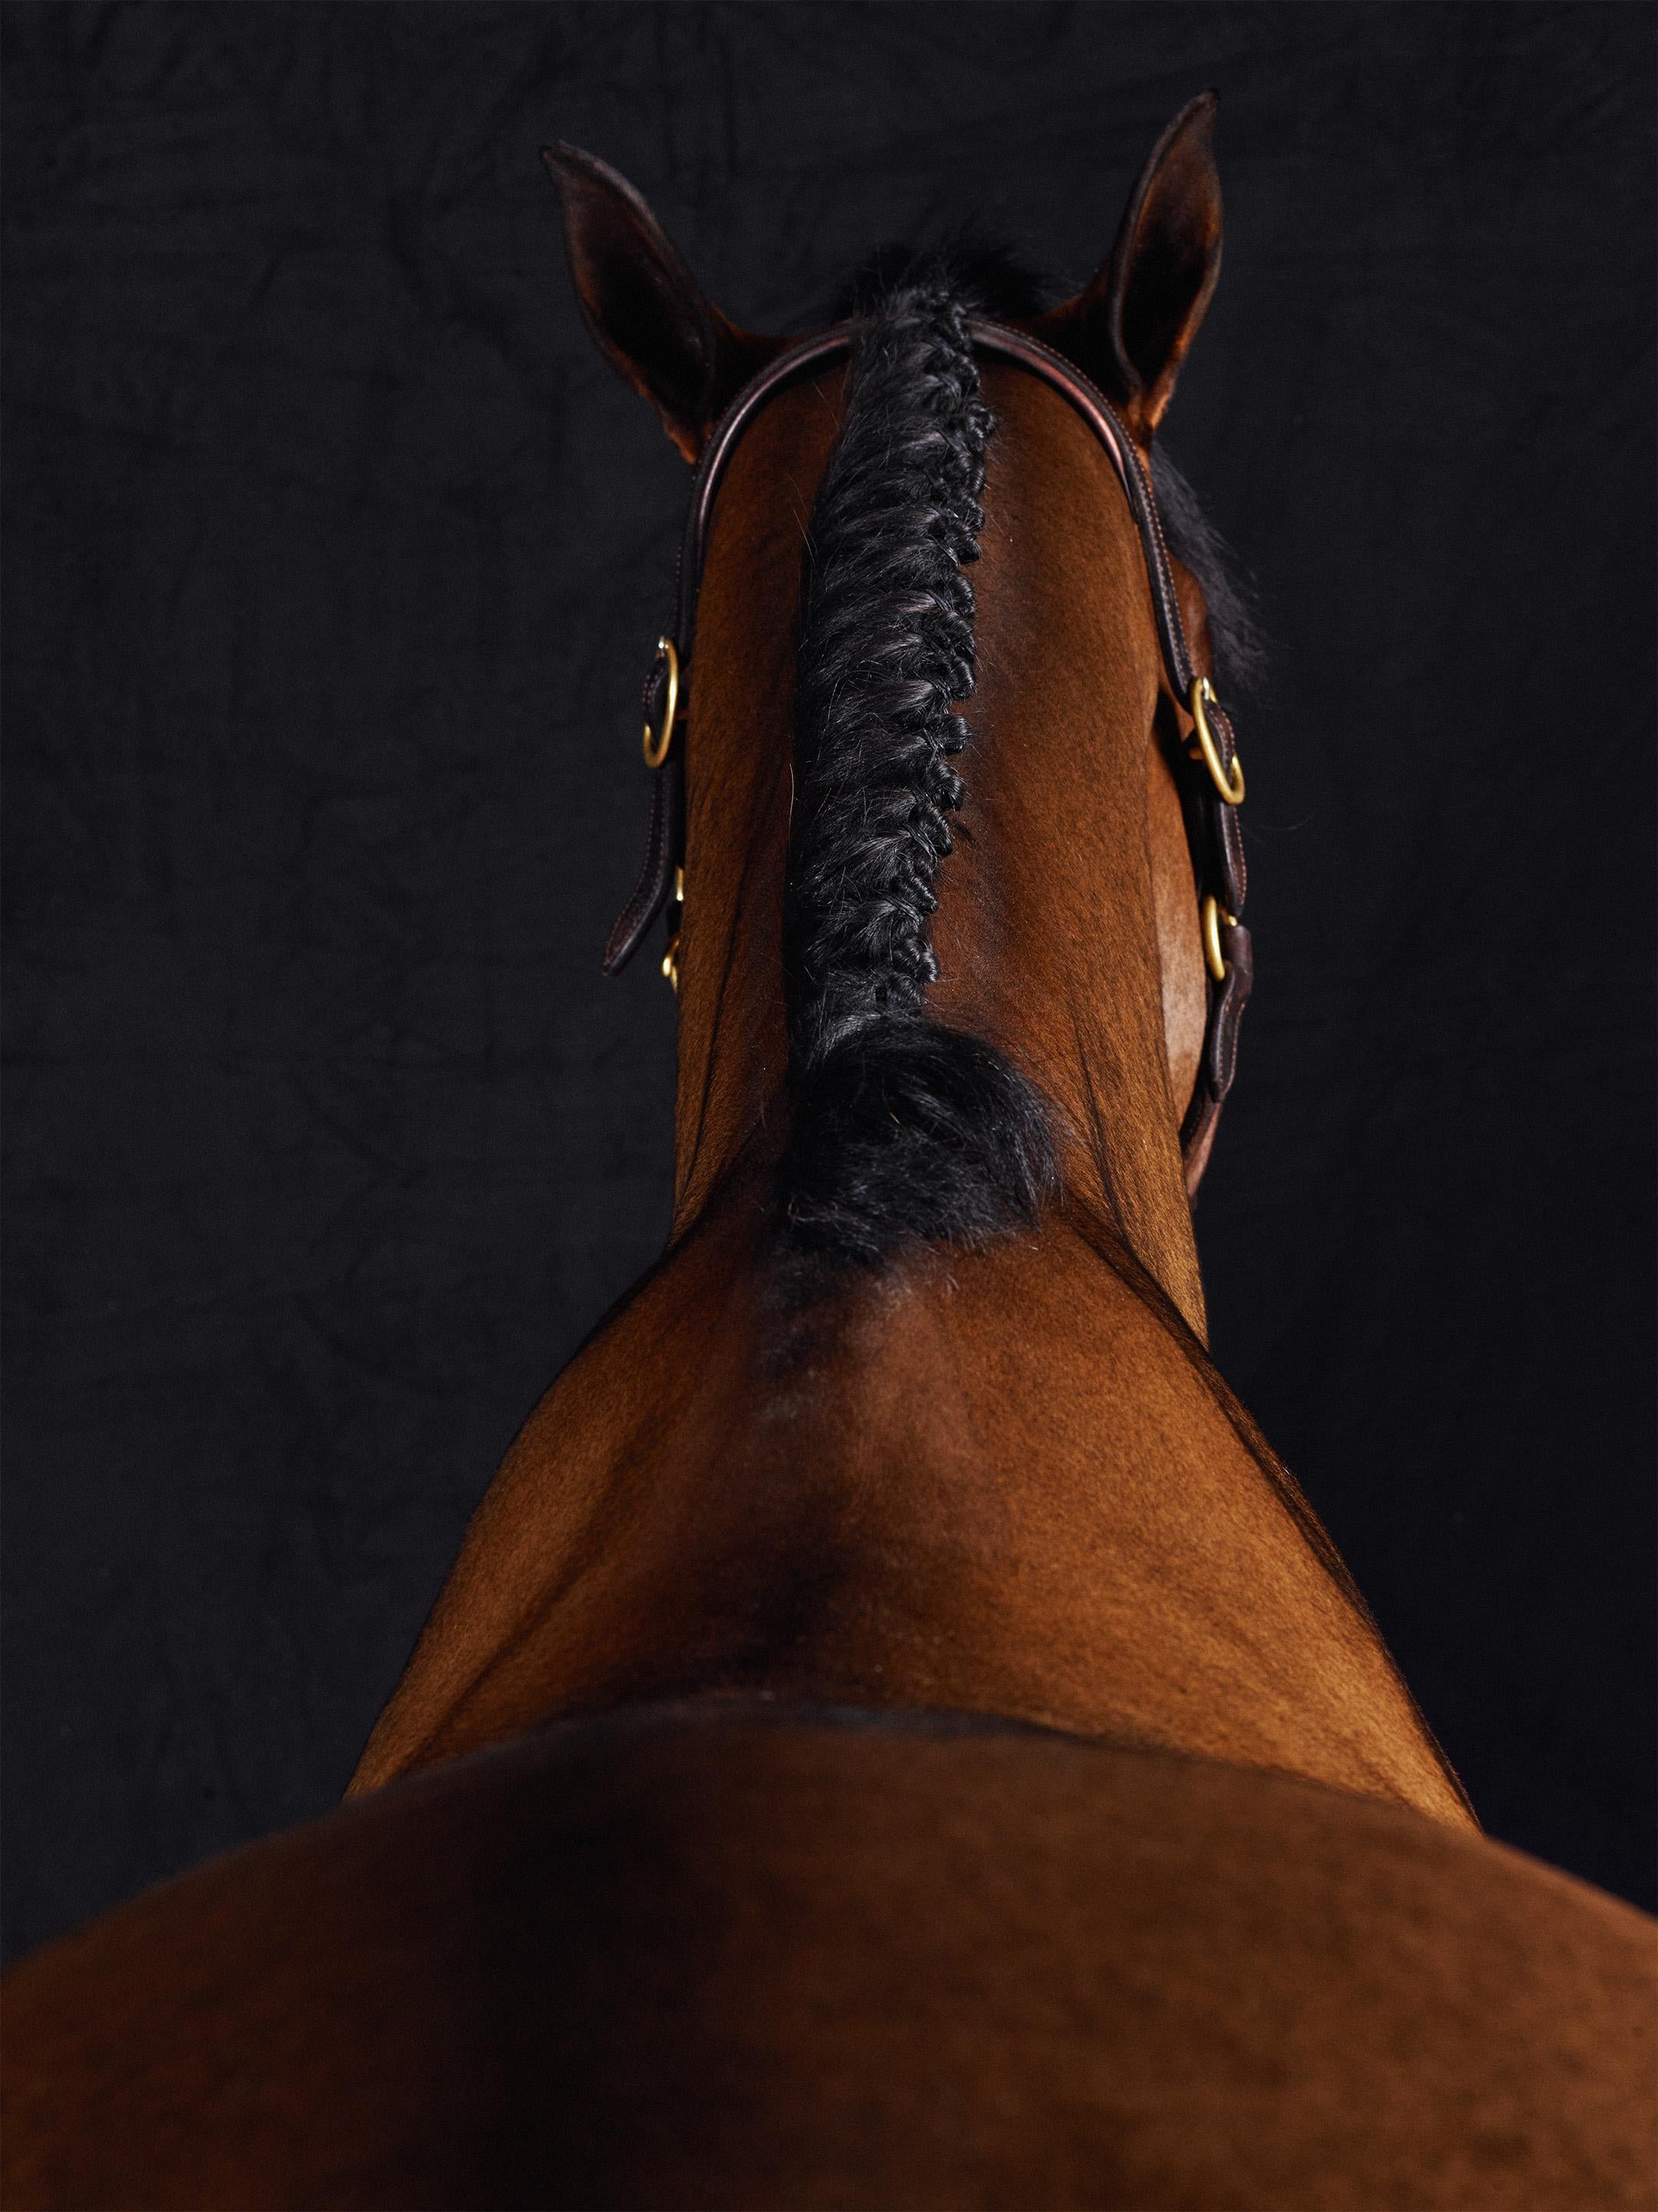 Juan Lamarca Abstract Photograph – Lamerick II – Pferdeporträt in voller Farbe, limitierte Auflage 2015